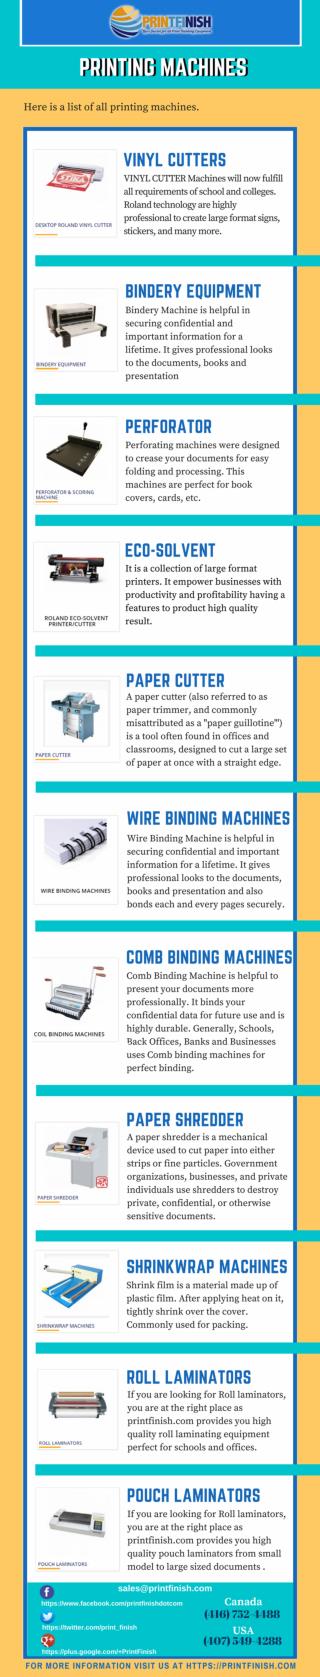 Buy Printing Machines at Printfinish.com